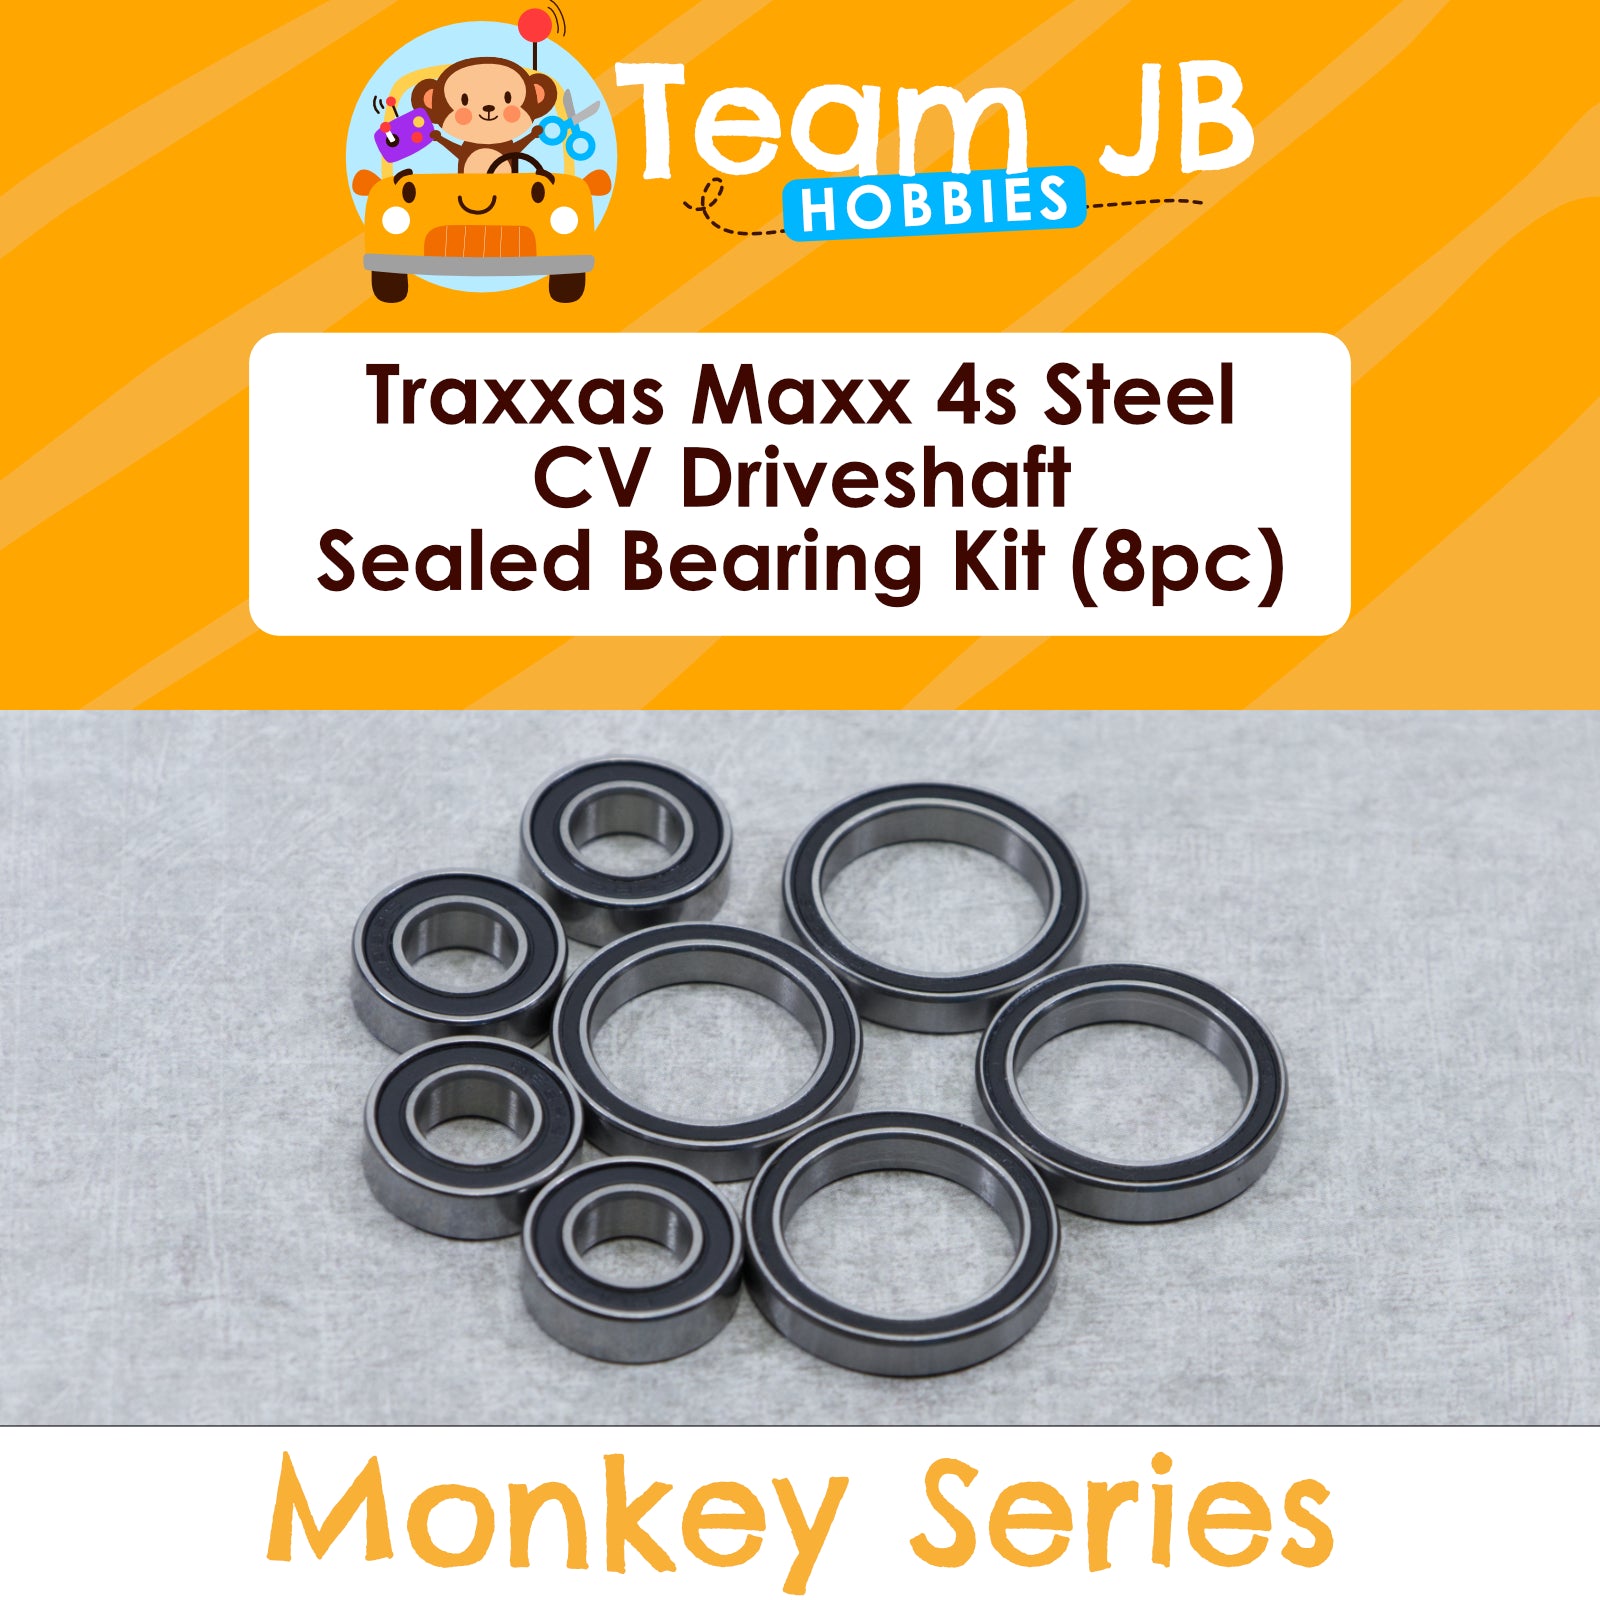 Traxxas Maxx 4s Steel CV Driveshaft - Sealed Bearing Kit